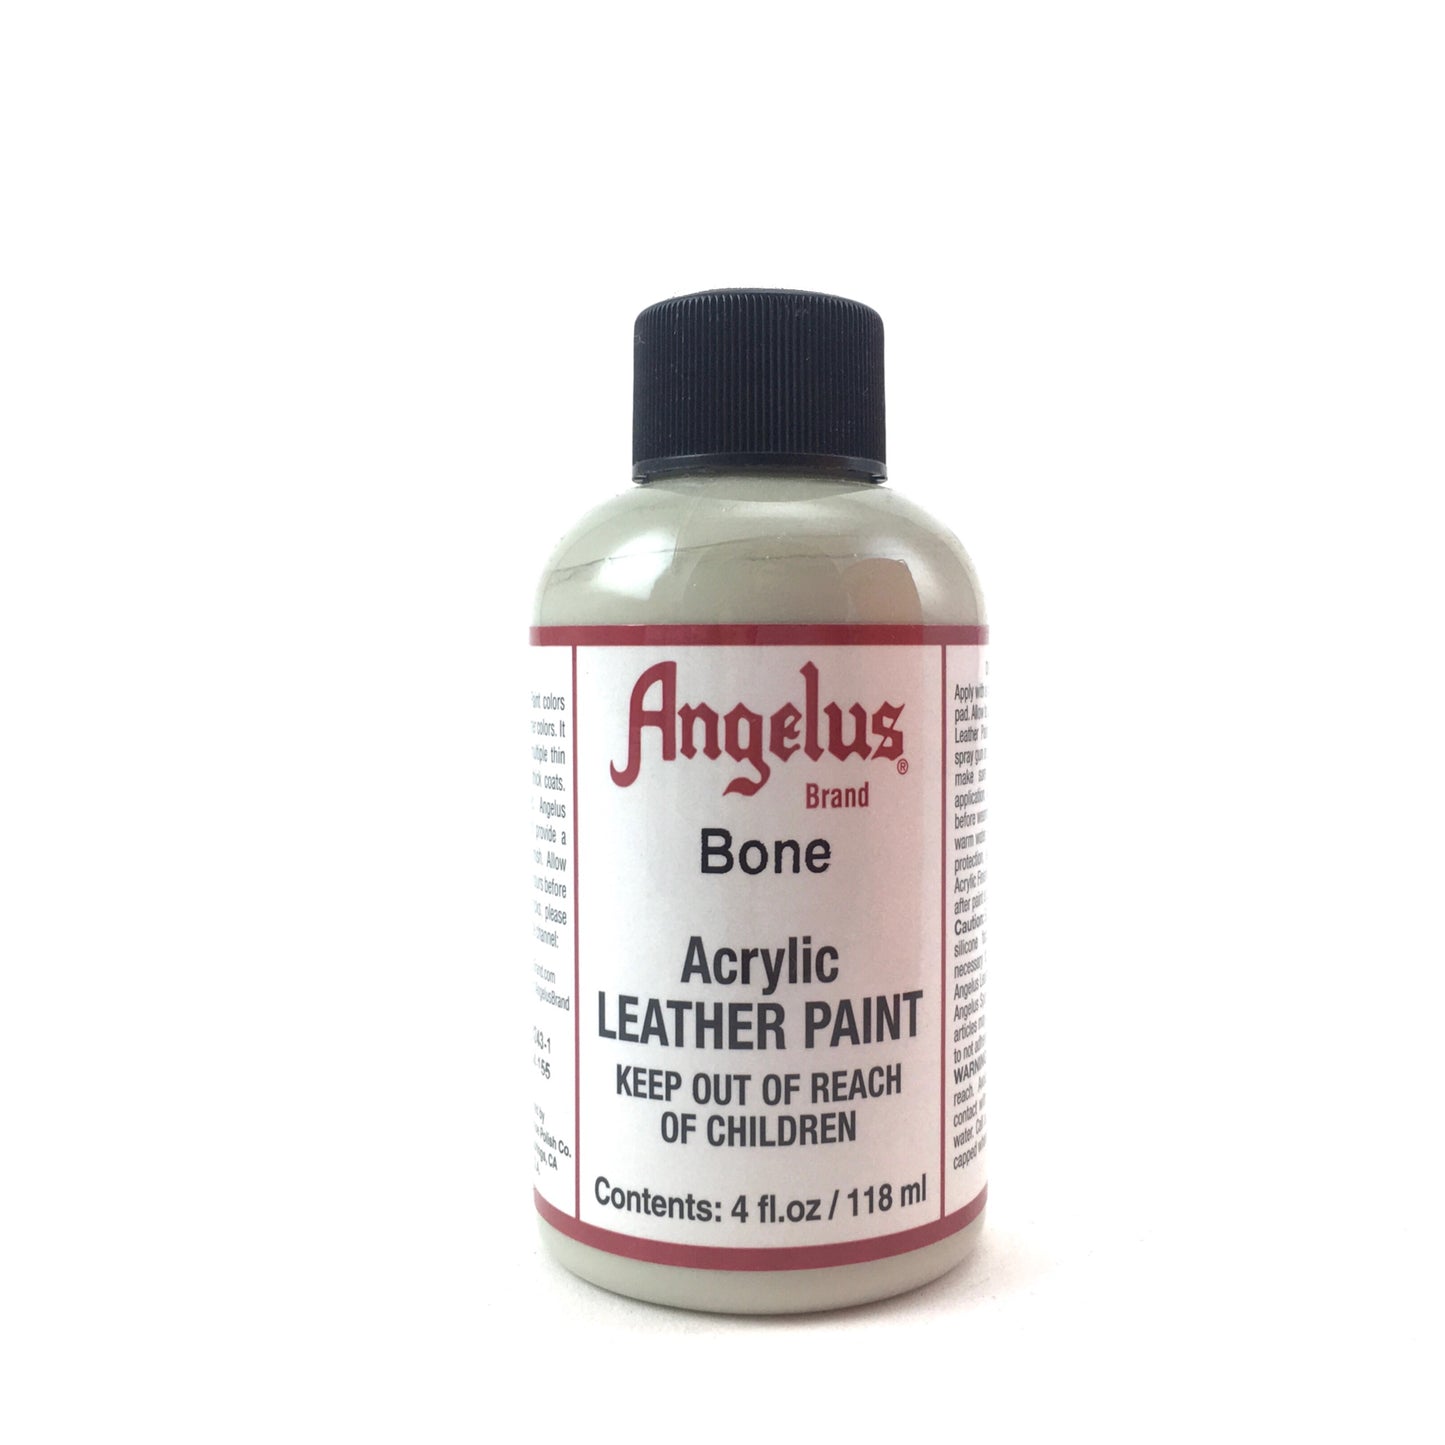 Angelus Acrylic Leather Paint - 4 oz. - Matte Bone by Angelus - K. A. Artist Shop